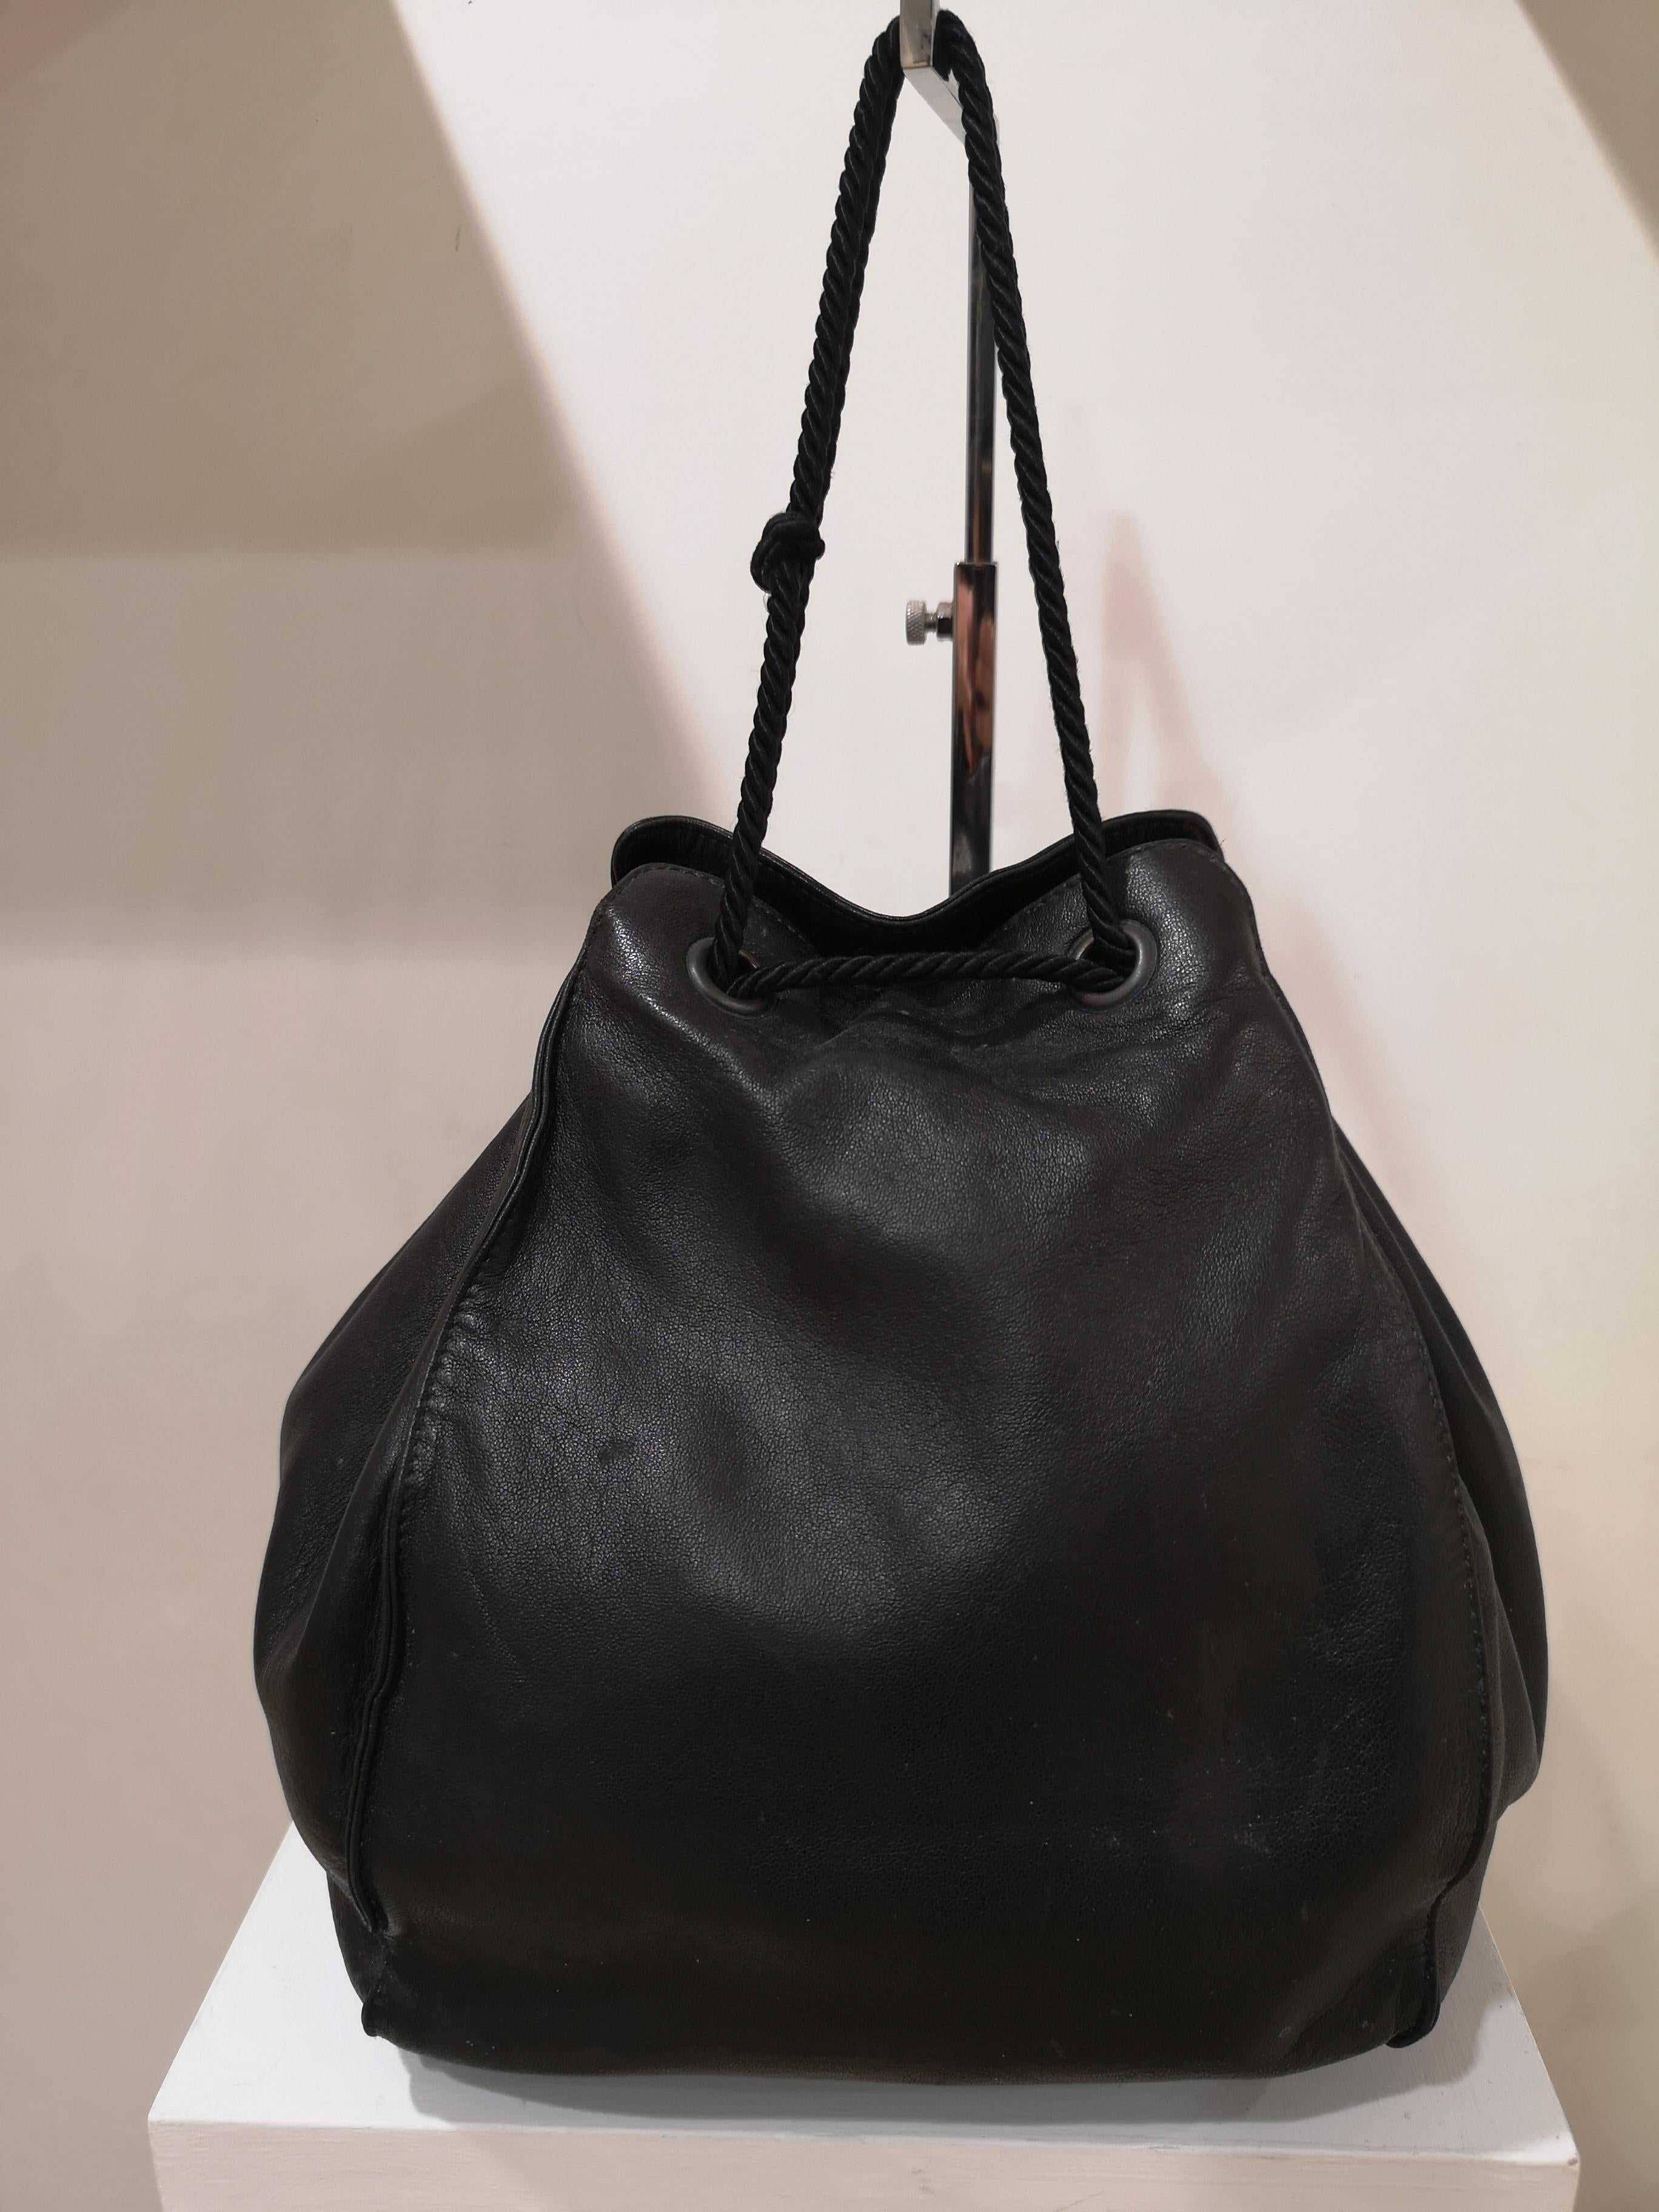 Women's Prada black leather satchel